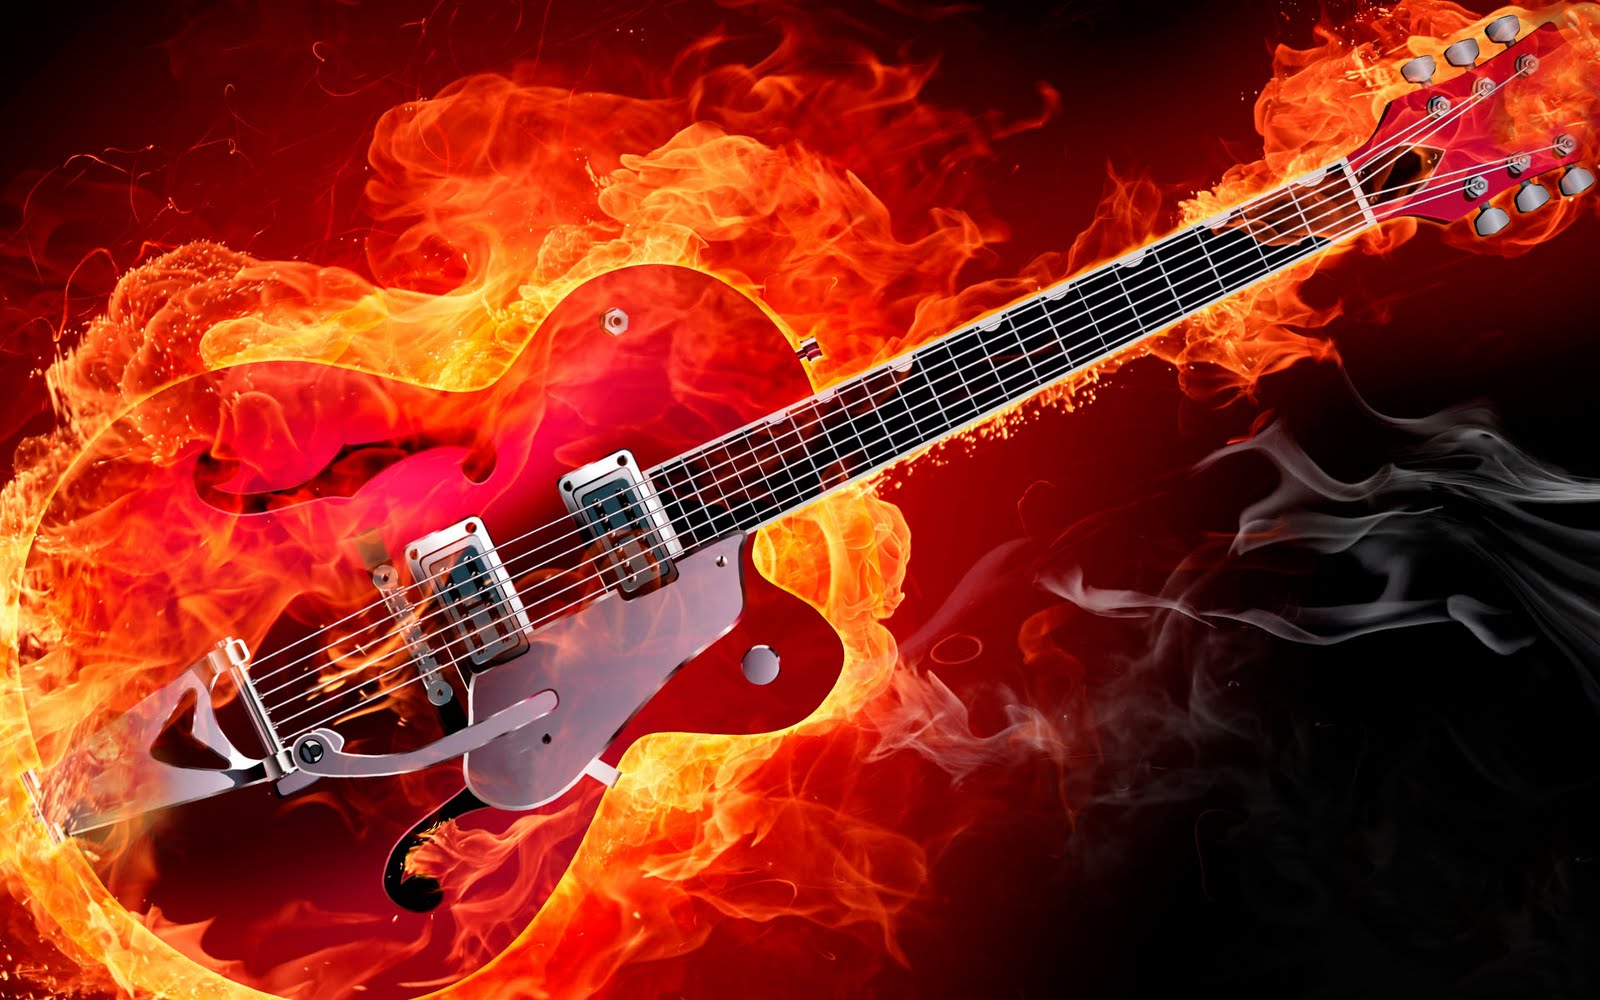 Rockabilly Guitar On Fire Red Smoke Flames HD Music Desktop Wallpaper